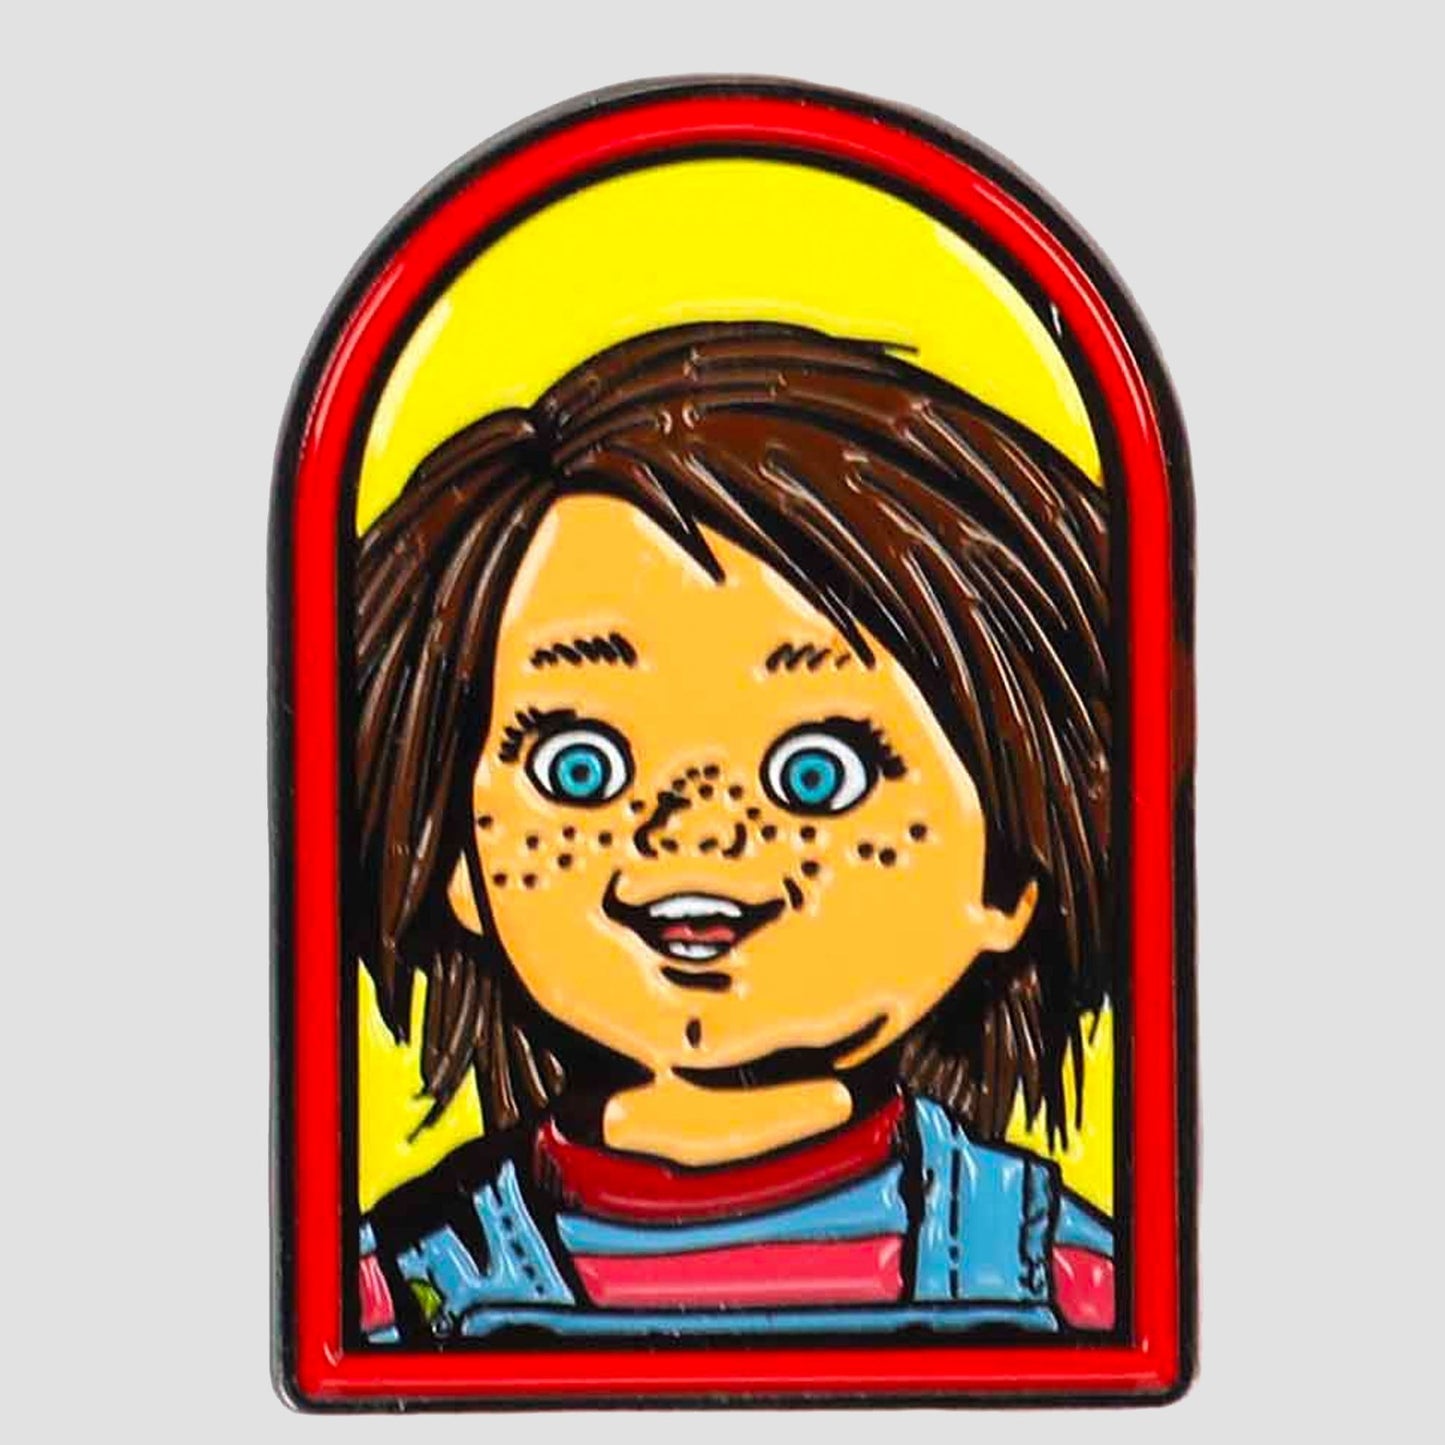 Chucky (Child's Play) Enamel Pin Set